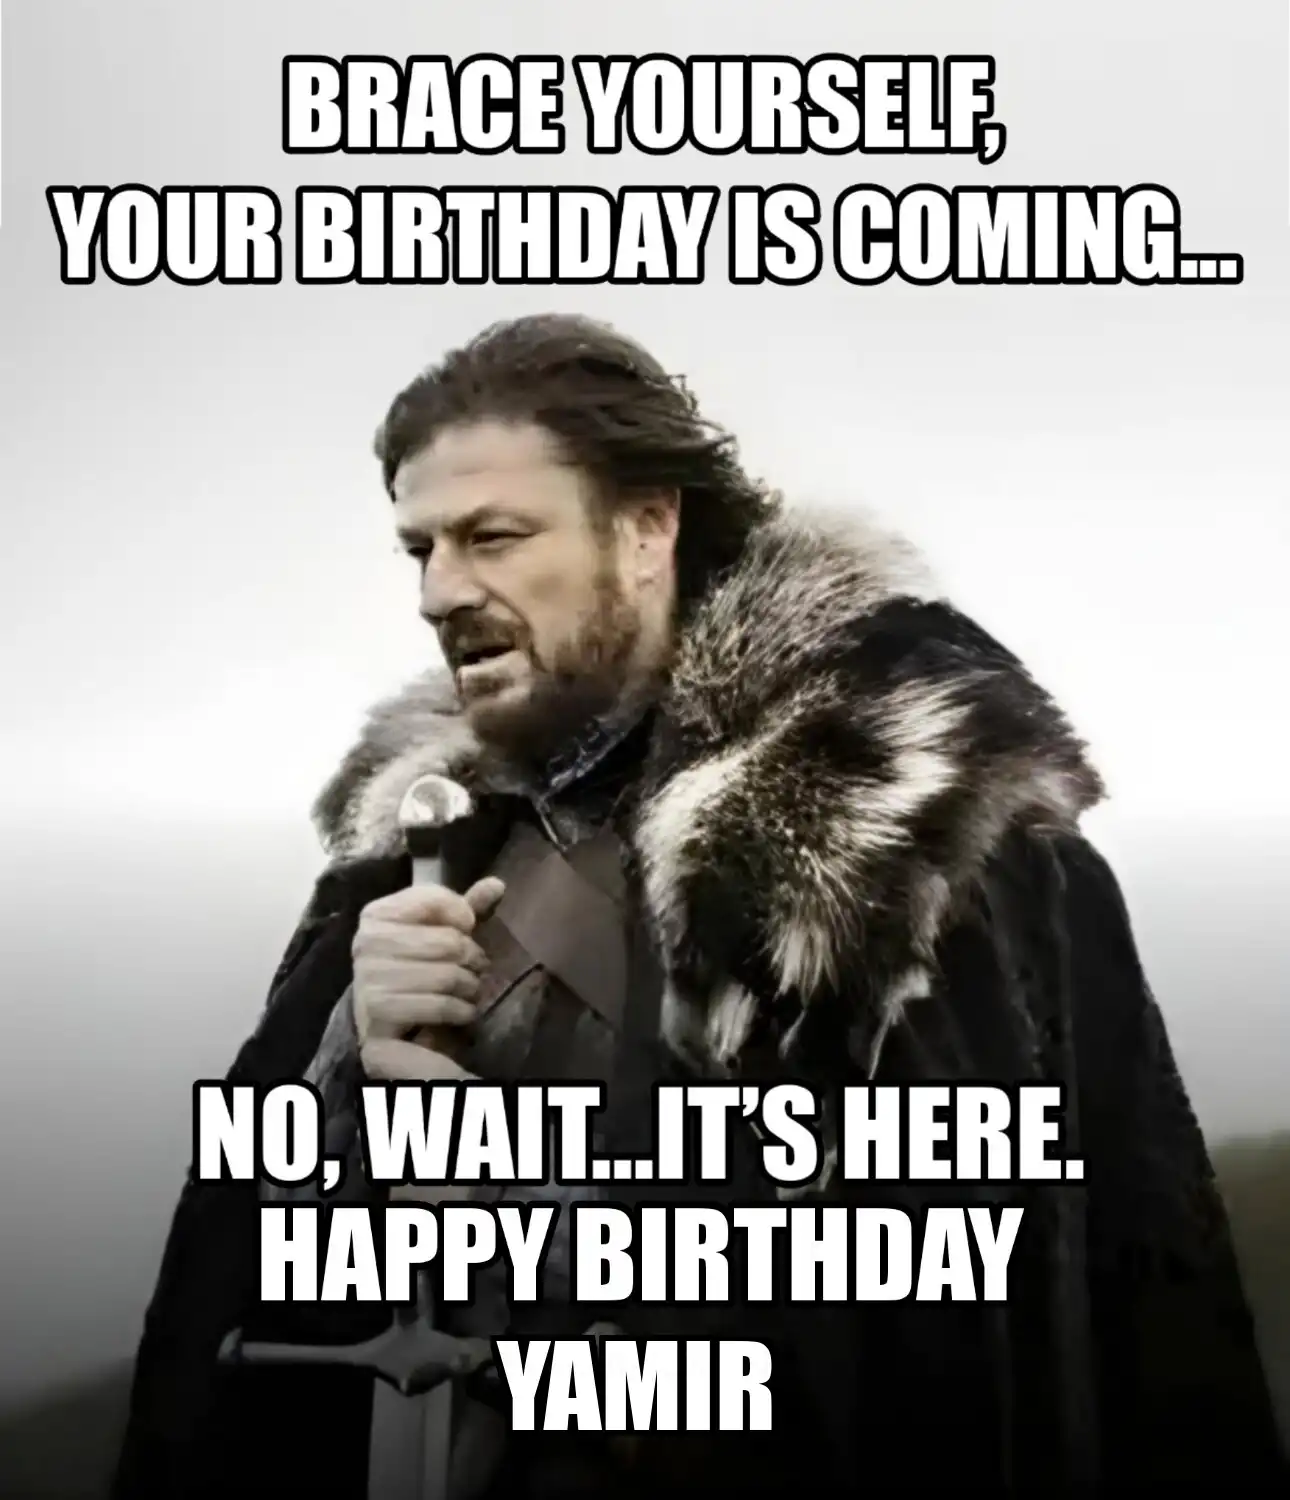 Happy Birthday Yamir Brace Yourself Your Birthday Is Coming Meme